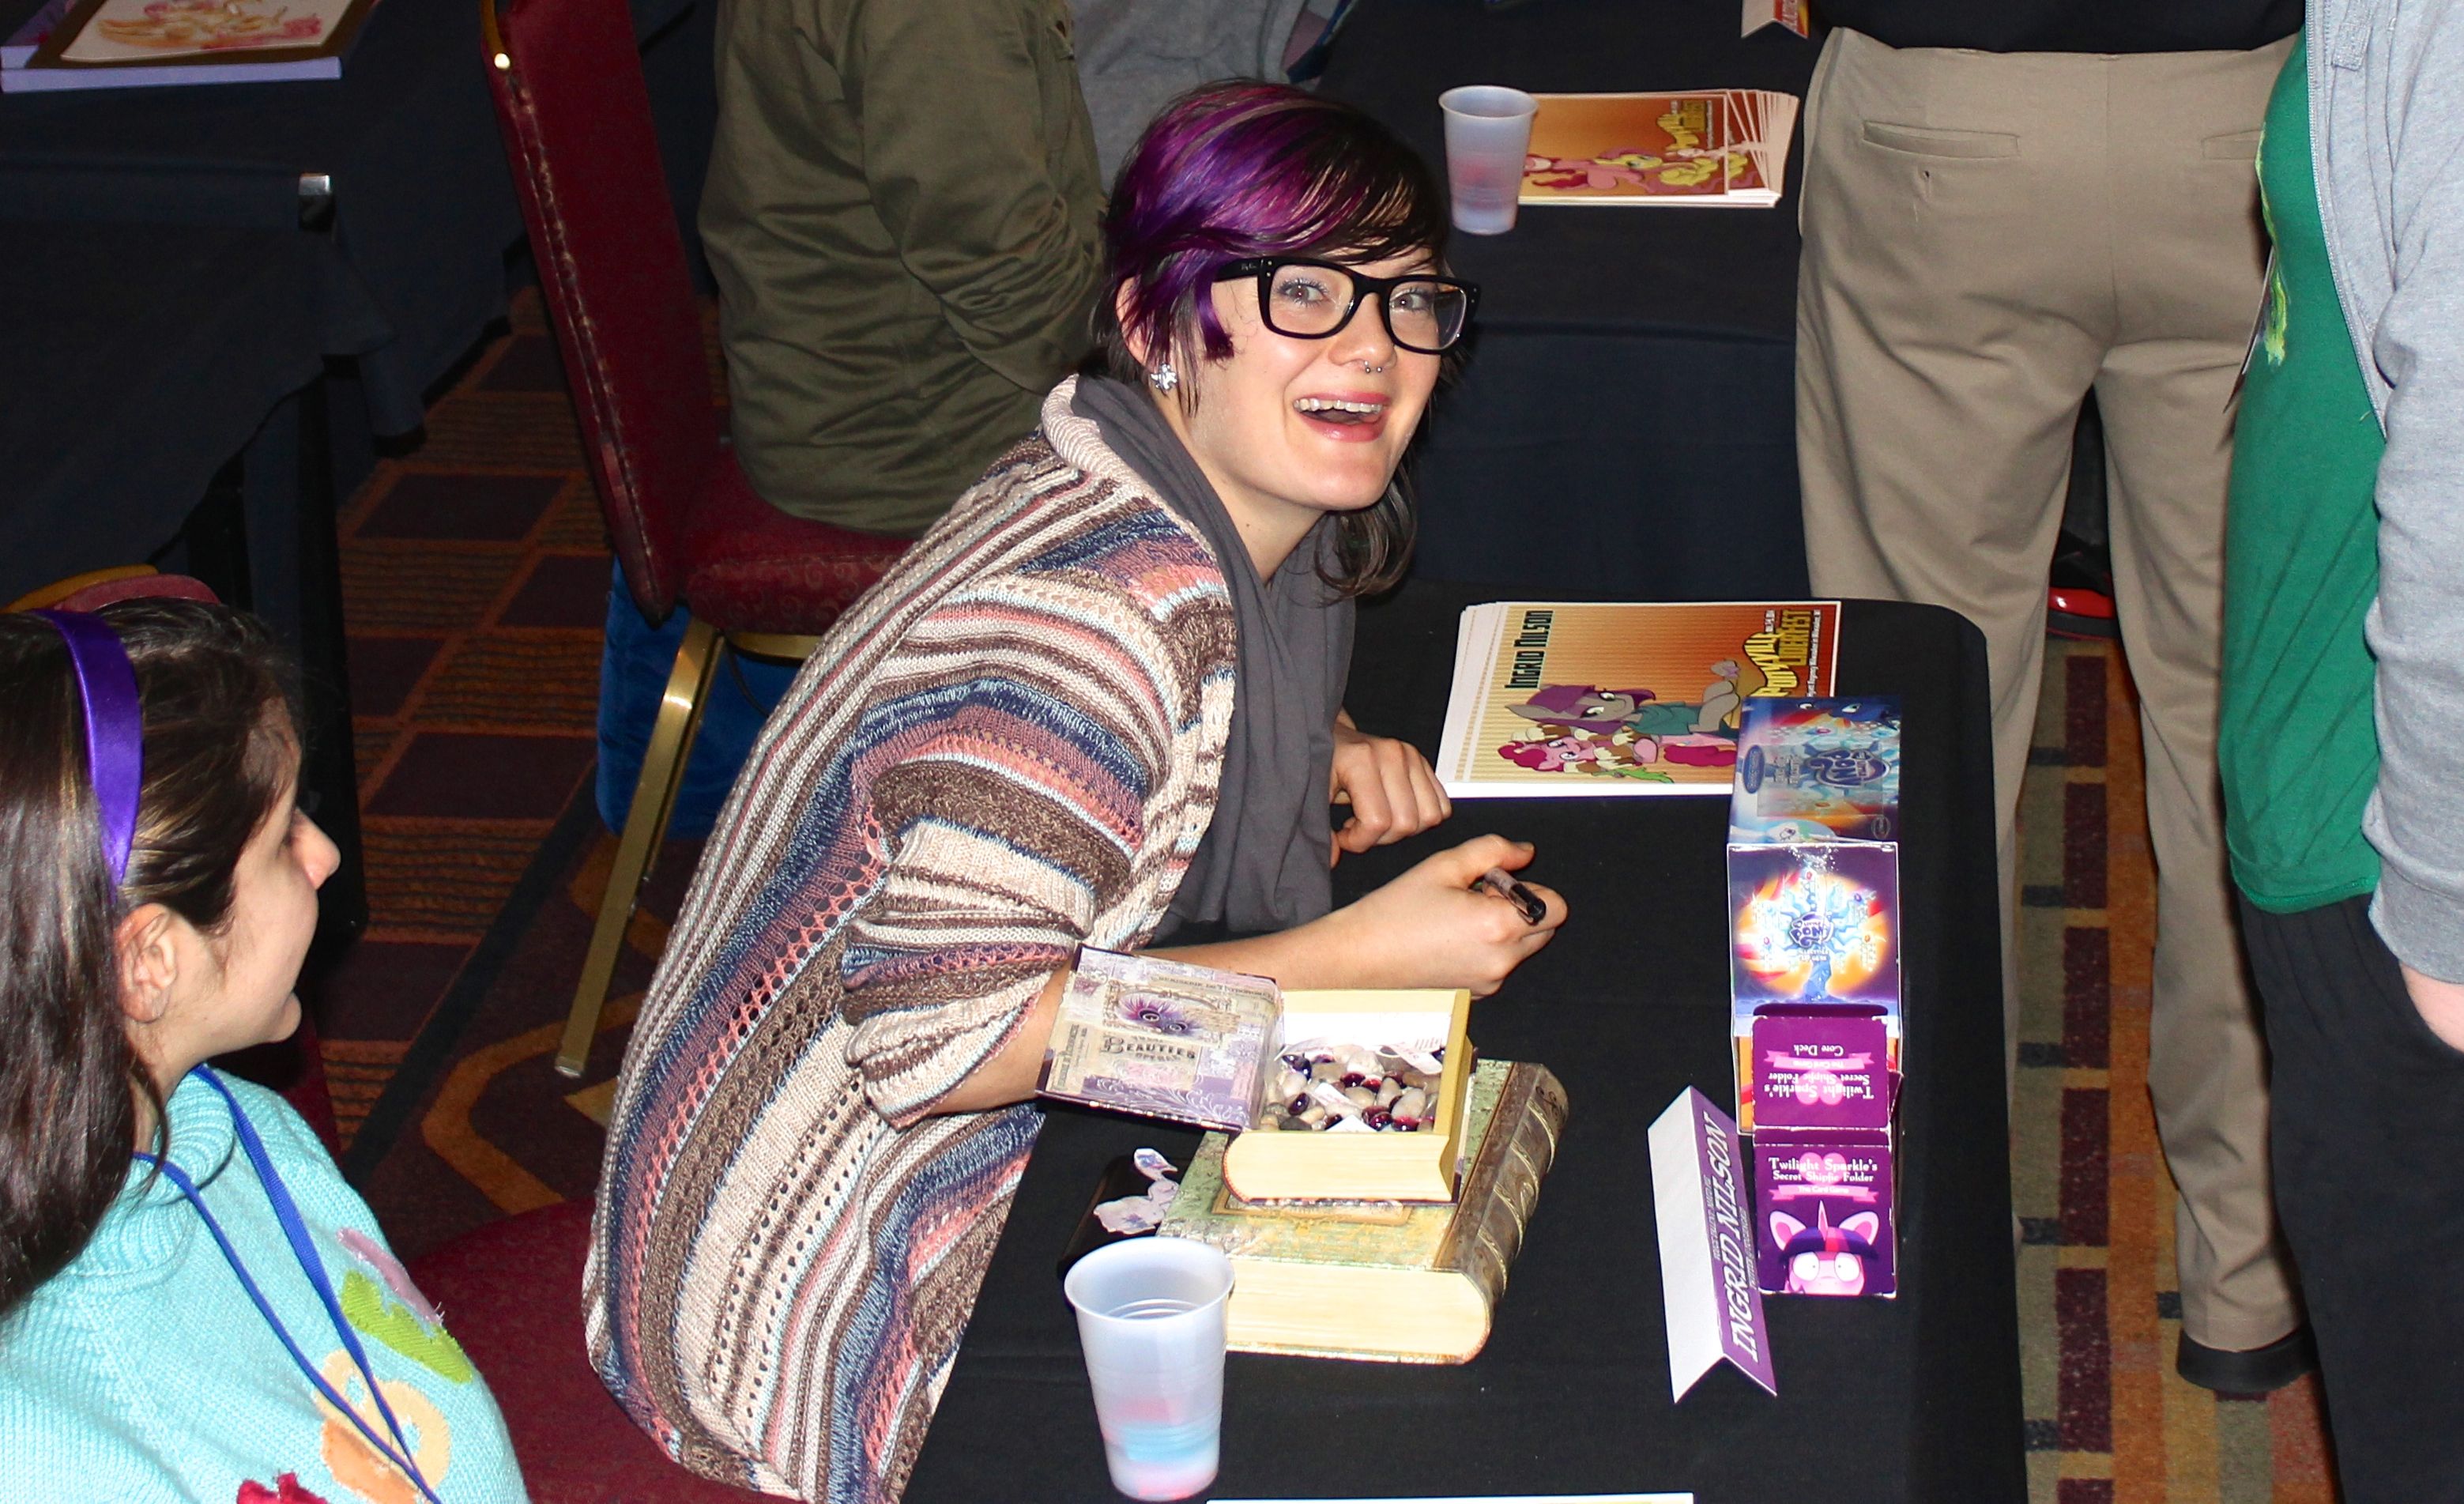 Ingrid at Ponyville Ciderfest signing autographs.